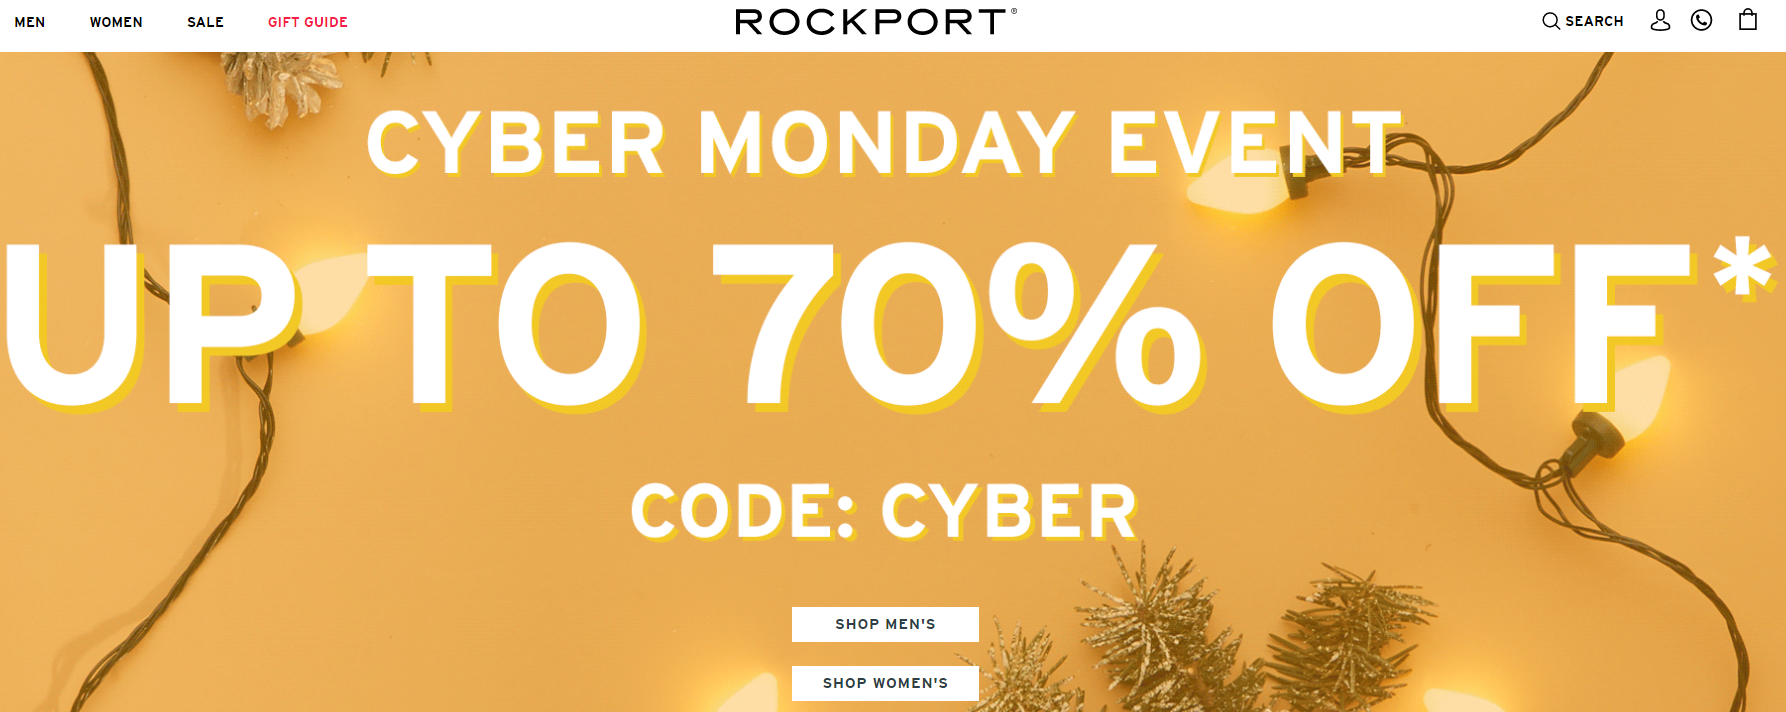 20211202141920 - Rockport Cyber Monday 2022